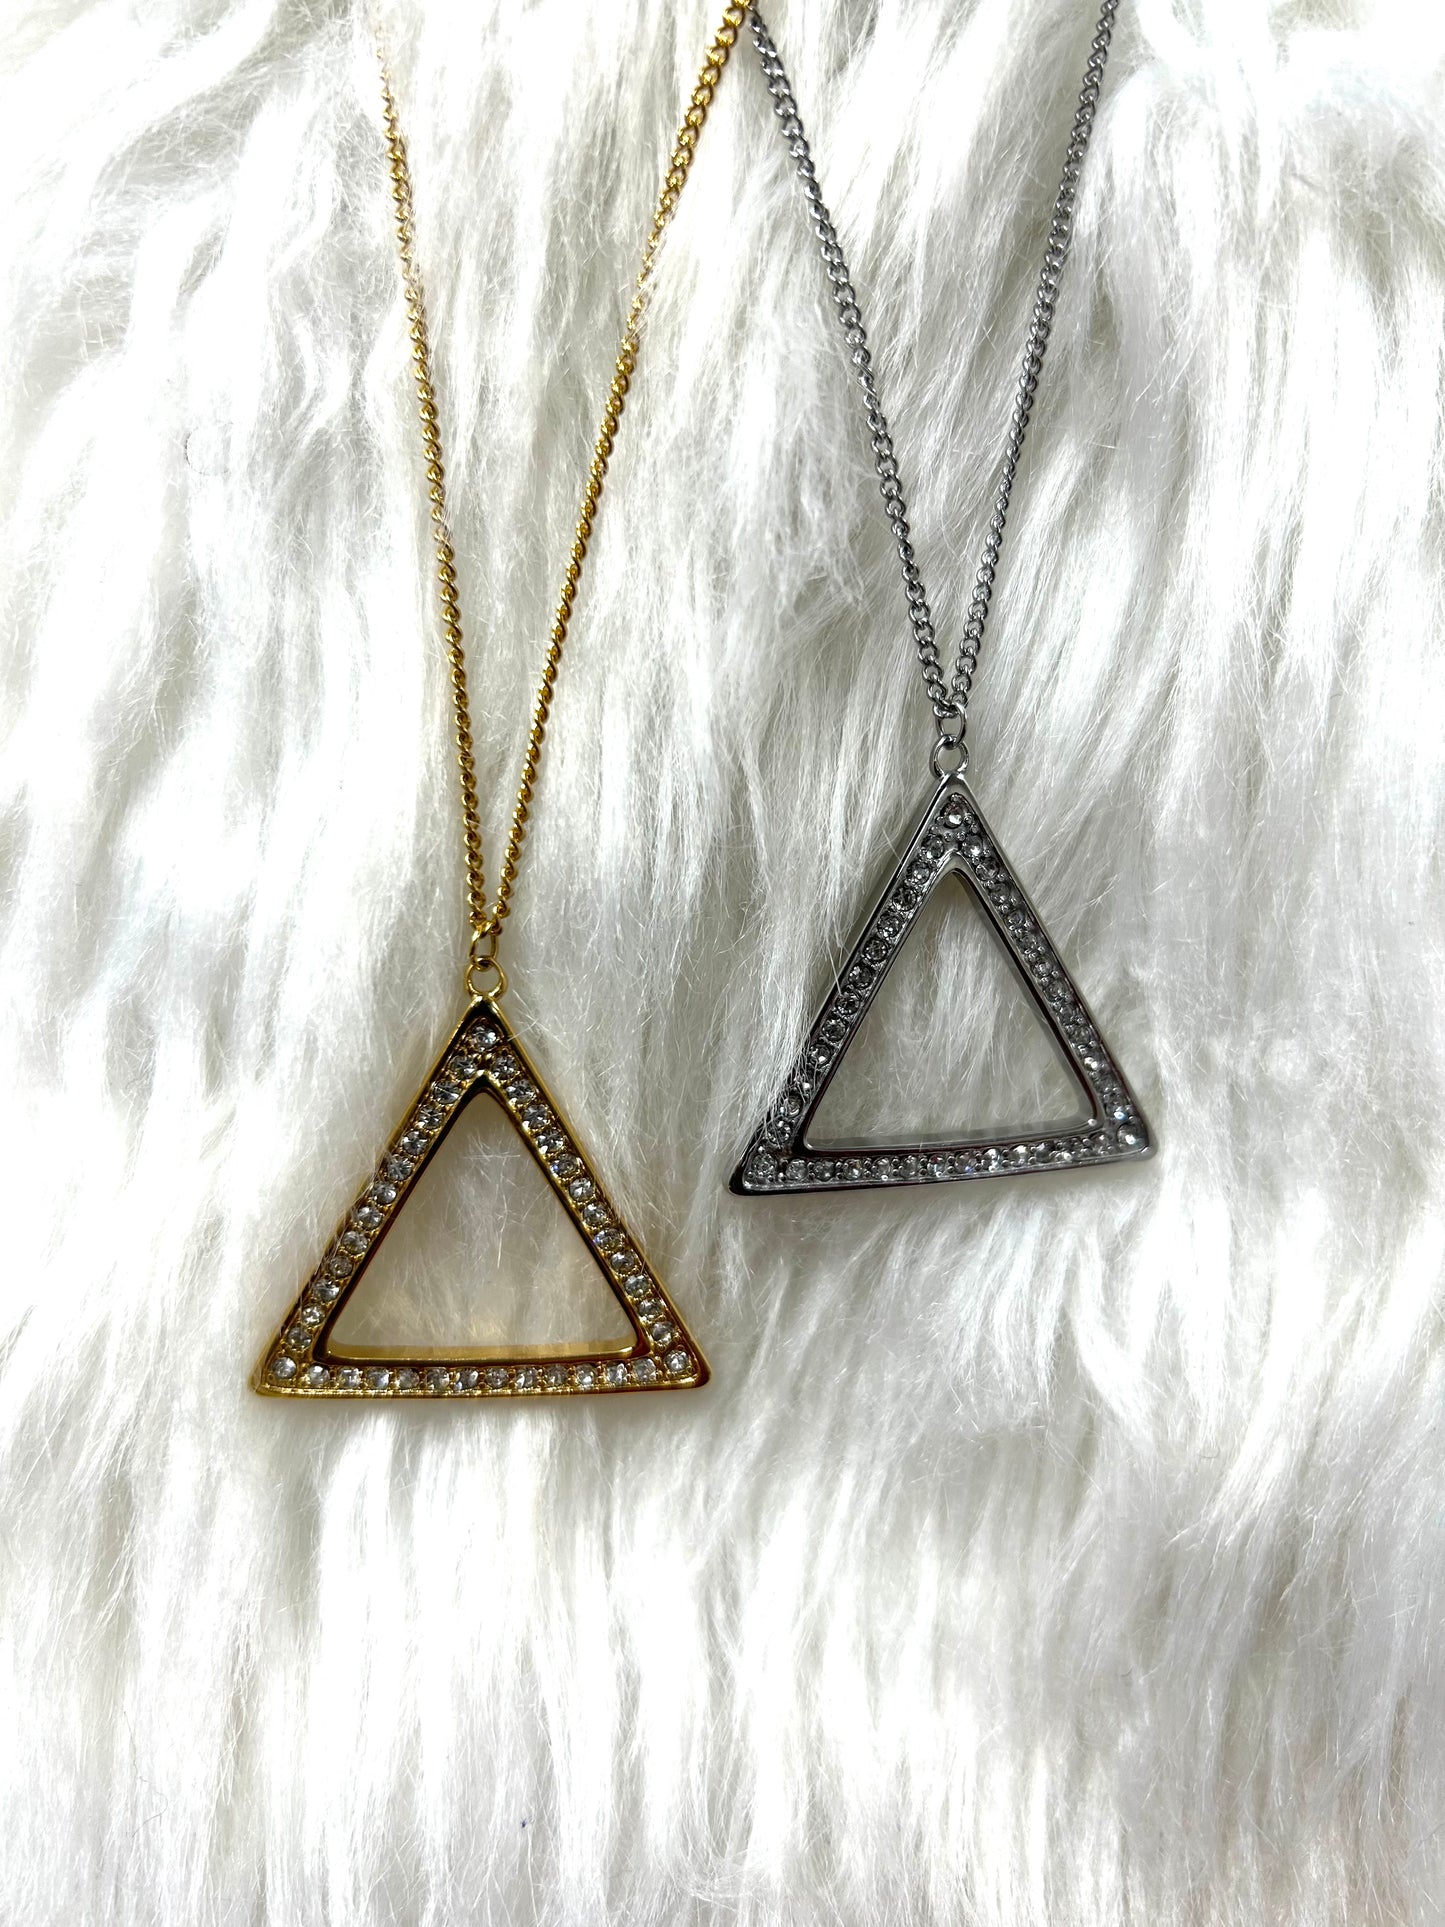 Delta Sigma Theta - speckled Pyramid Necklace